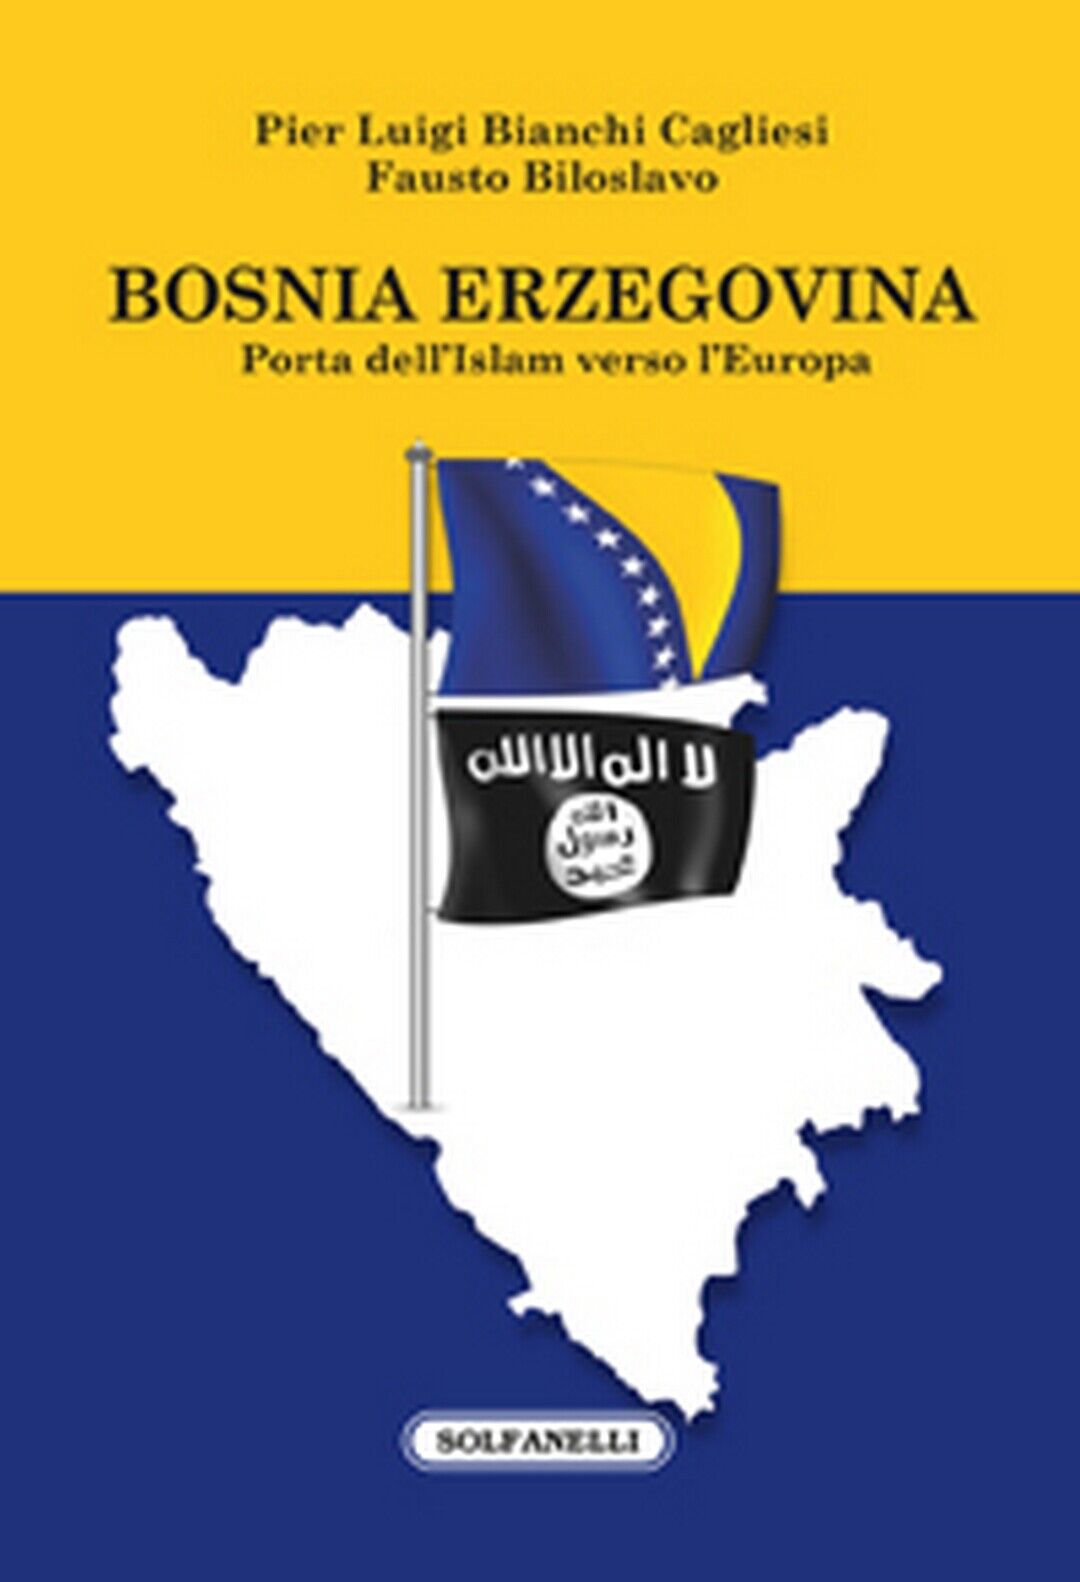 BOSNIA ERZEGOVINA PORTA DELL'ISLAM VERSO L'EUROPA, AA. VV., Solfanelli Ed.